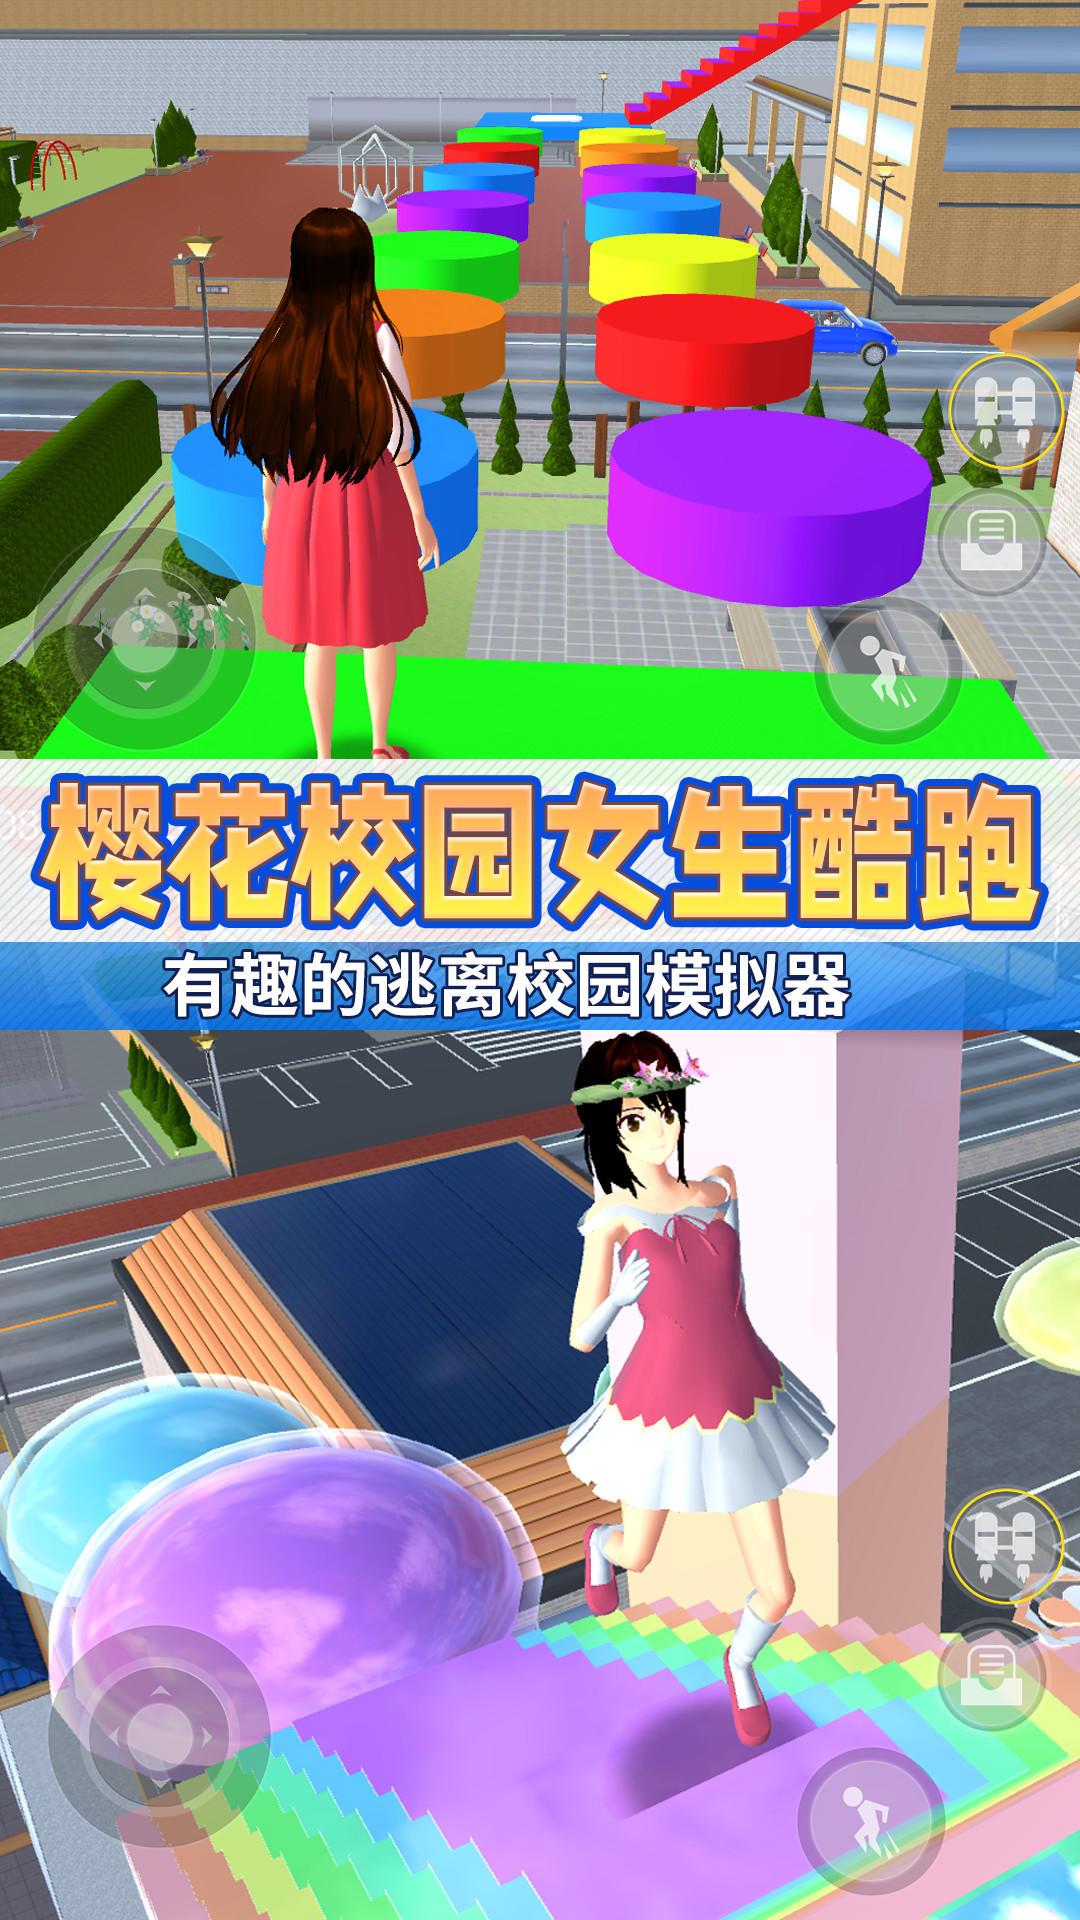 Screenshot 1 of Nữ sinh Anime Parkour 3D 1.0.0